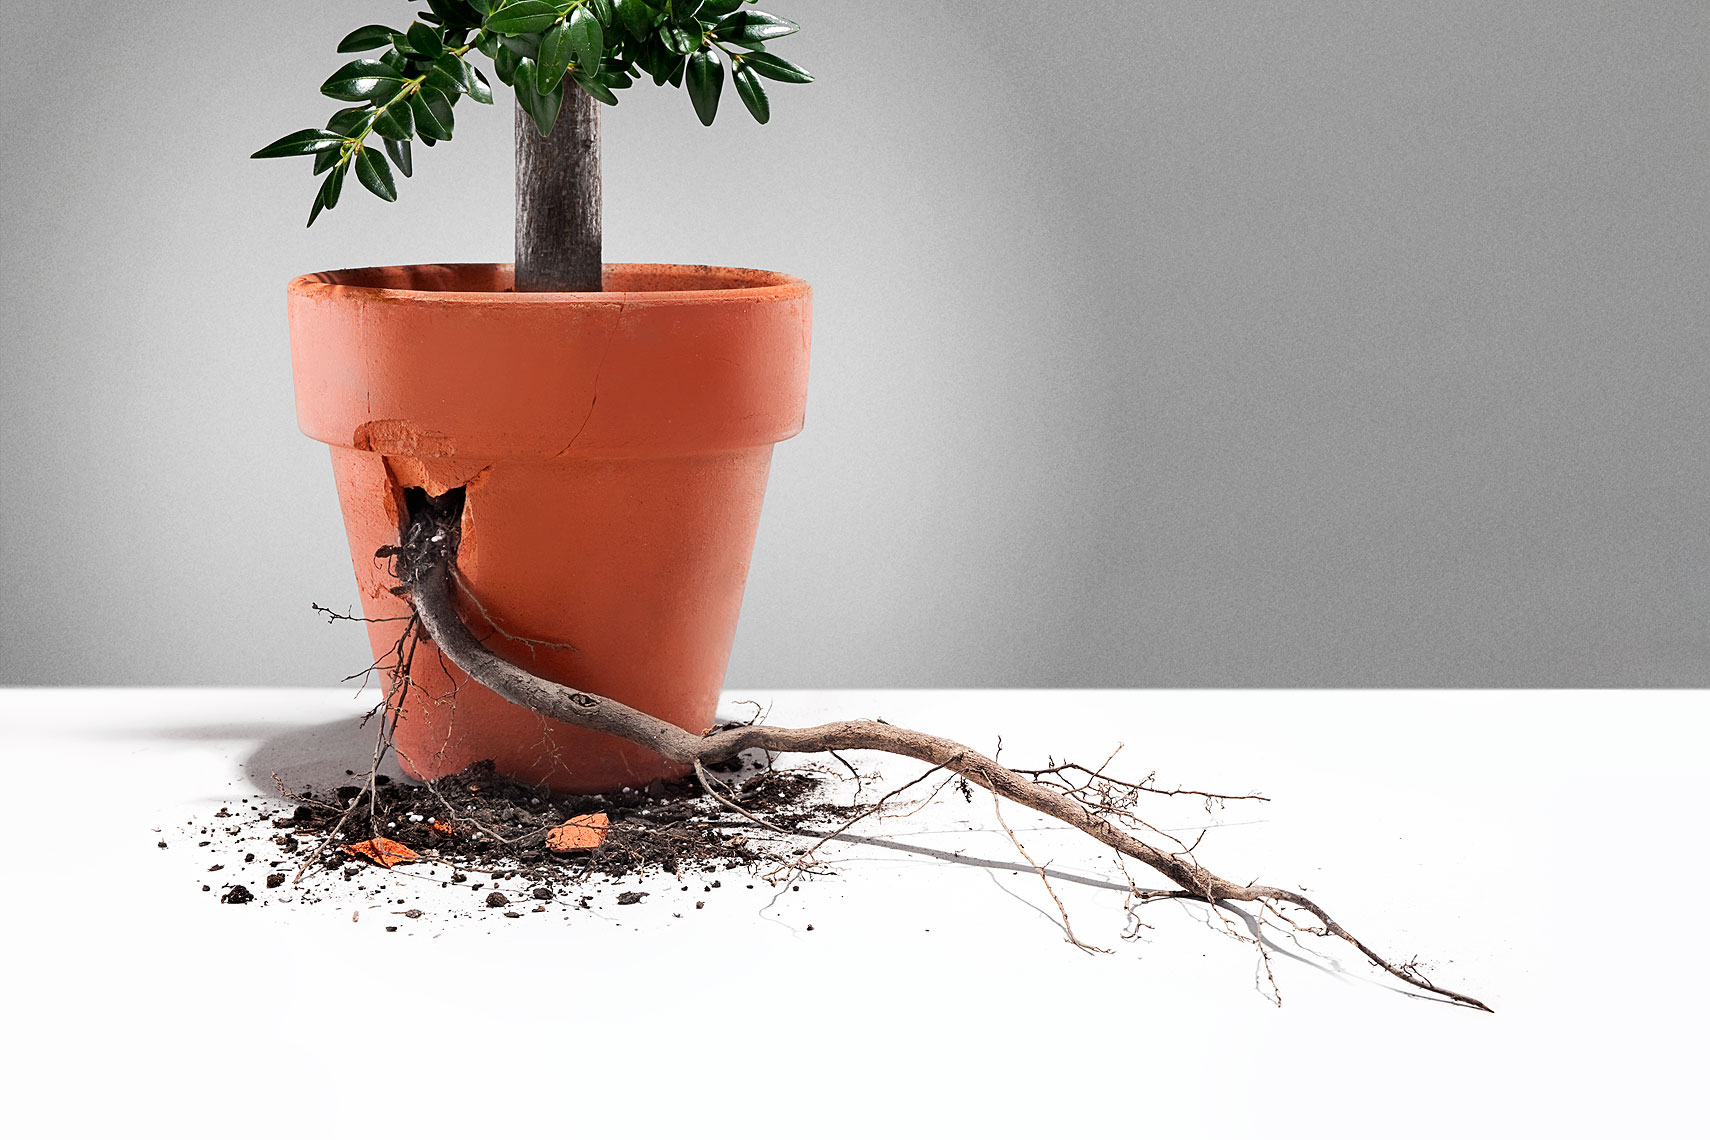 Growing roots breaking free conceptual photo by John Kuczala